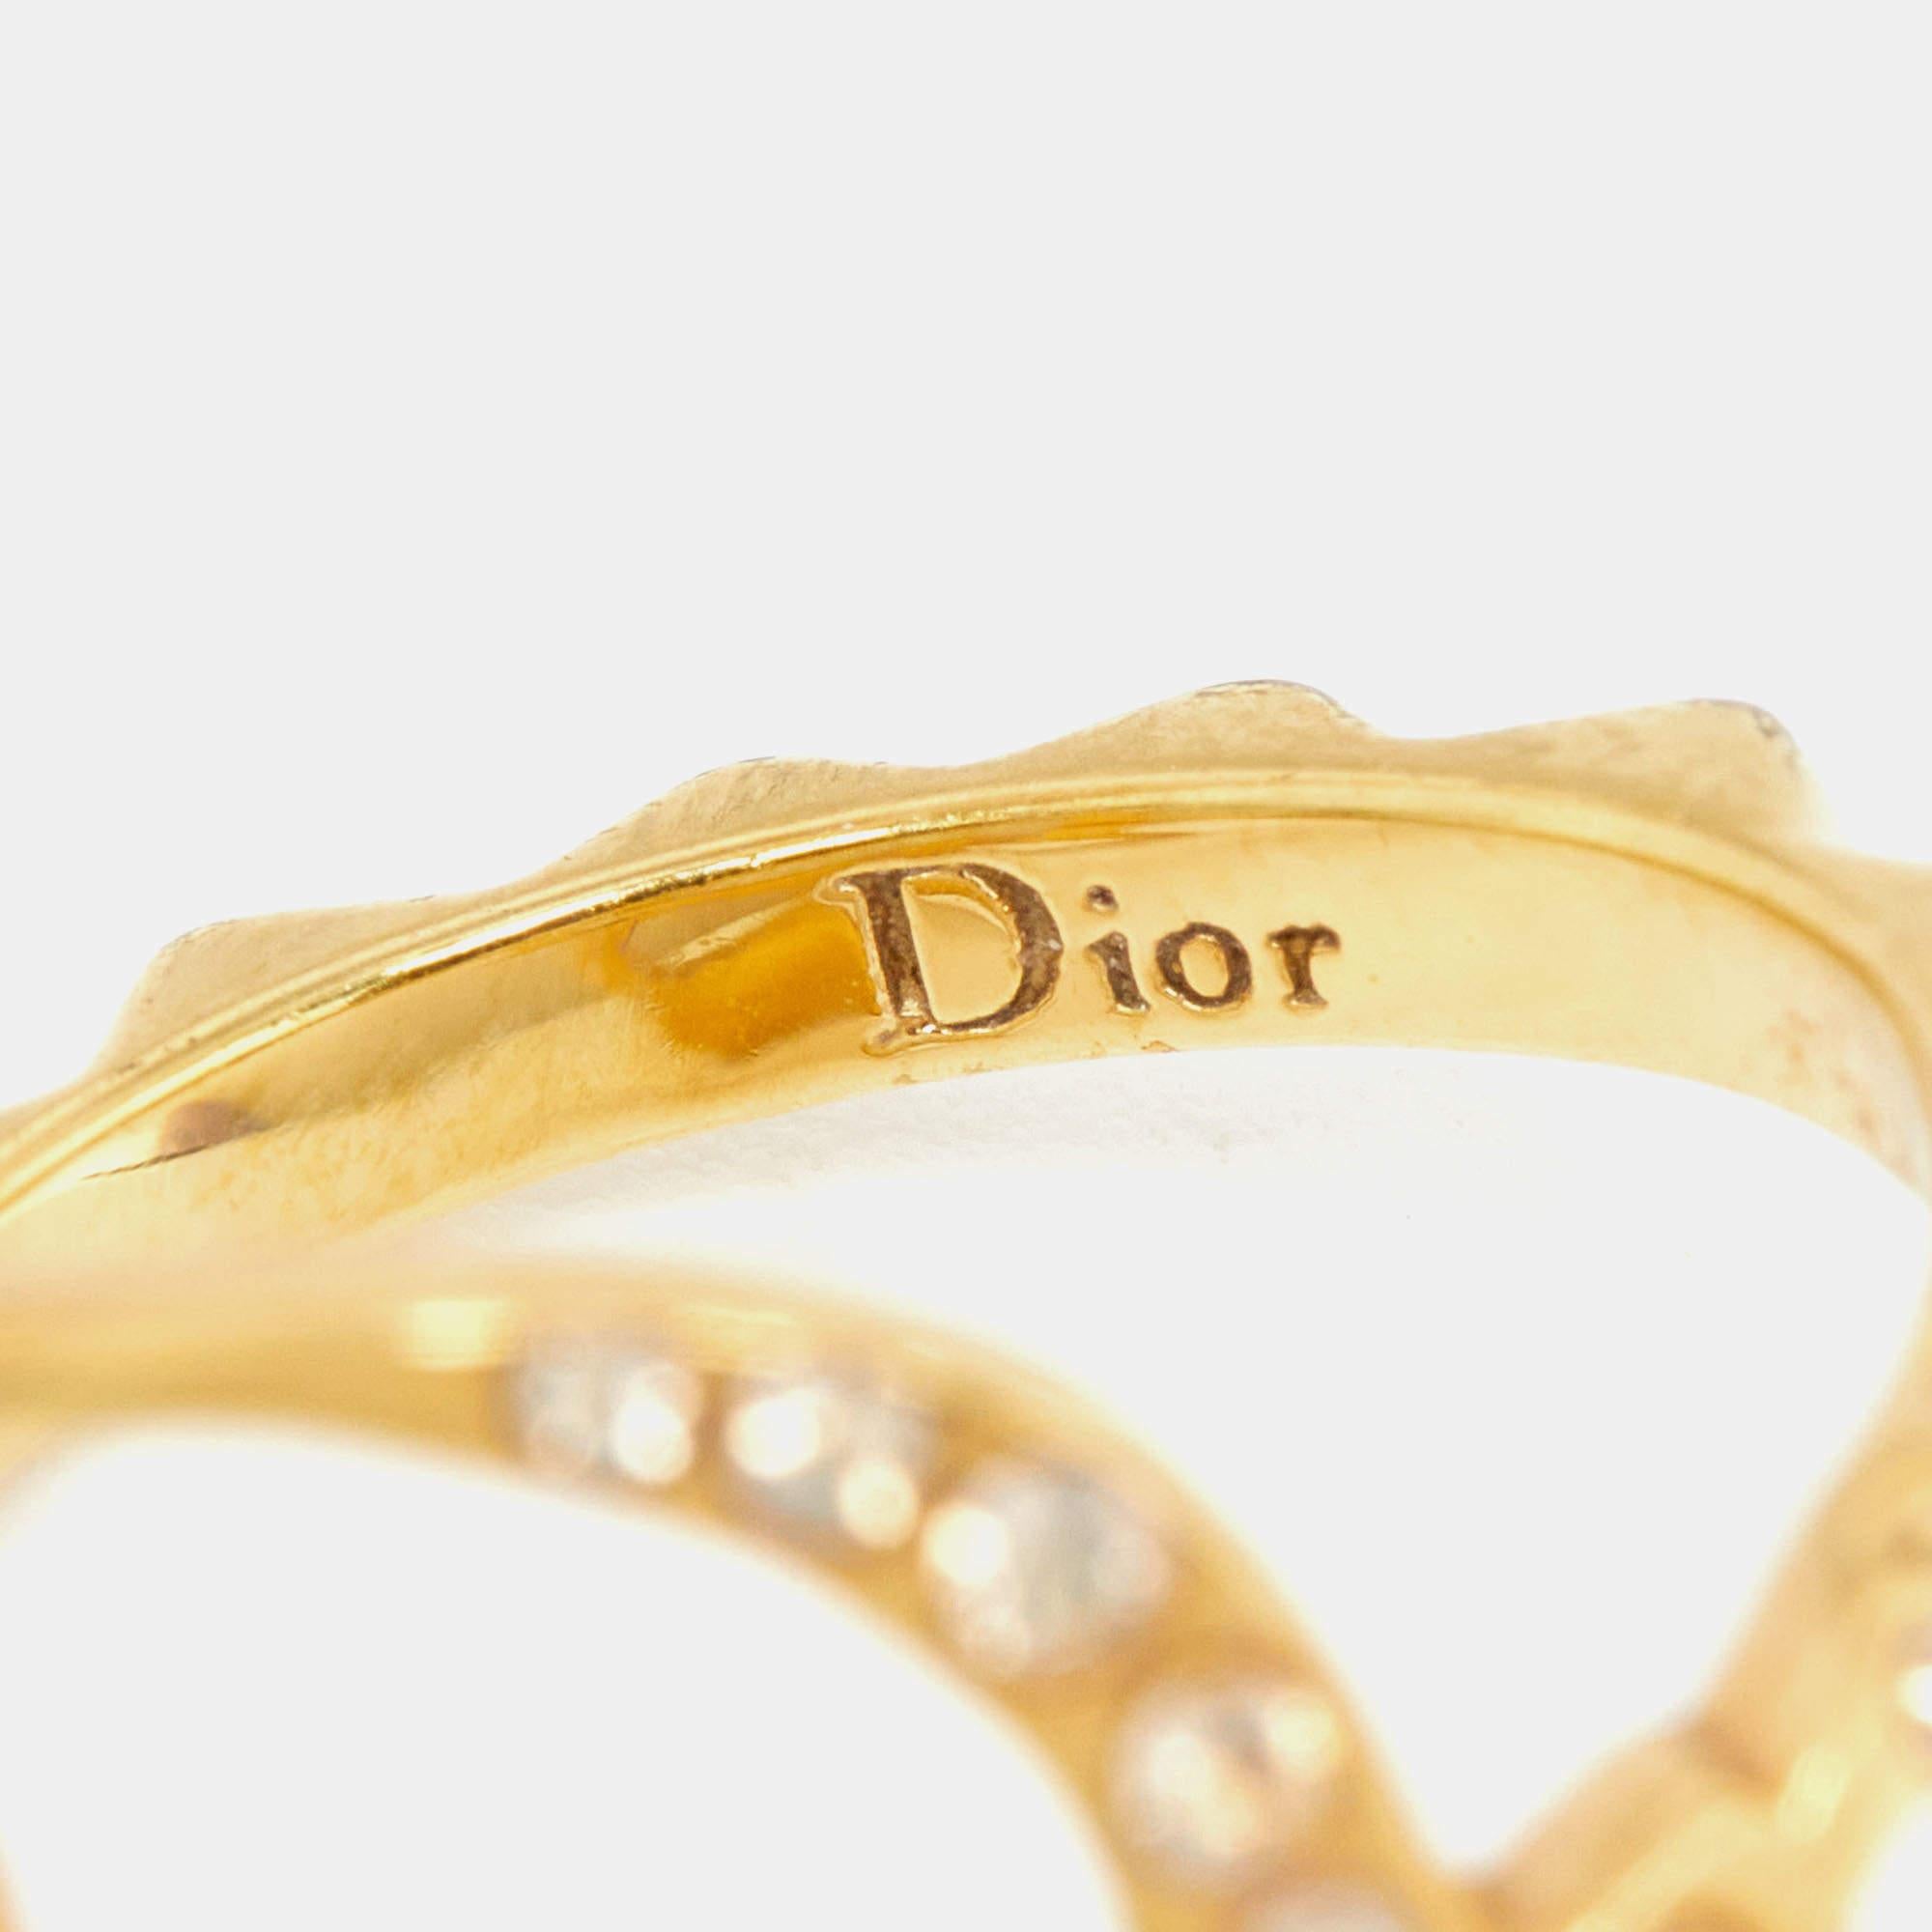 dior ring sizes